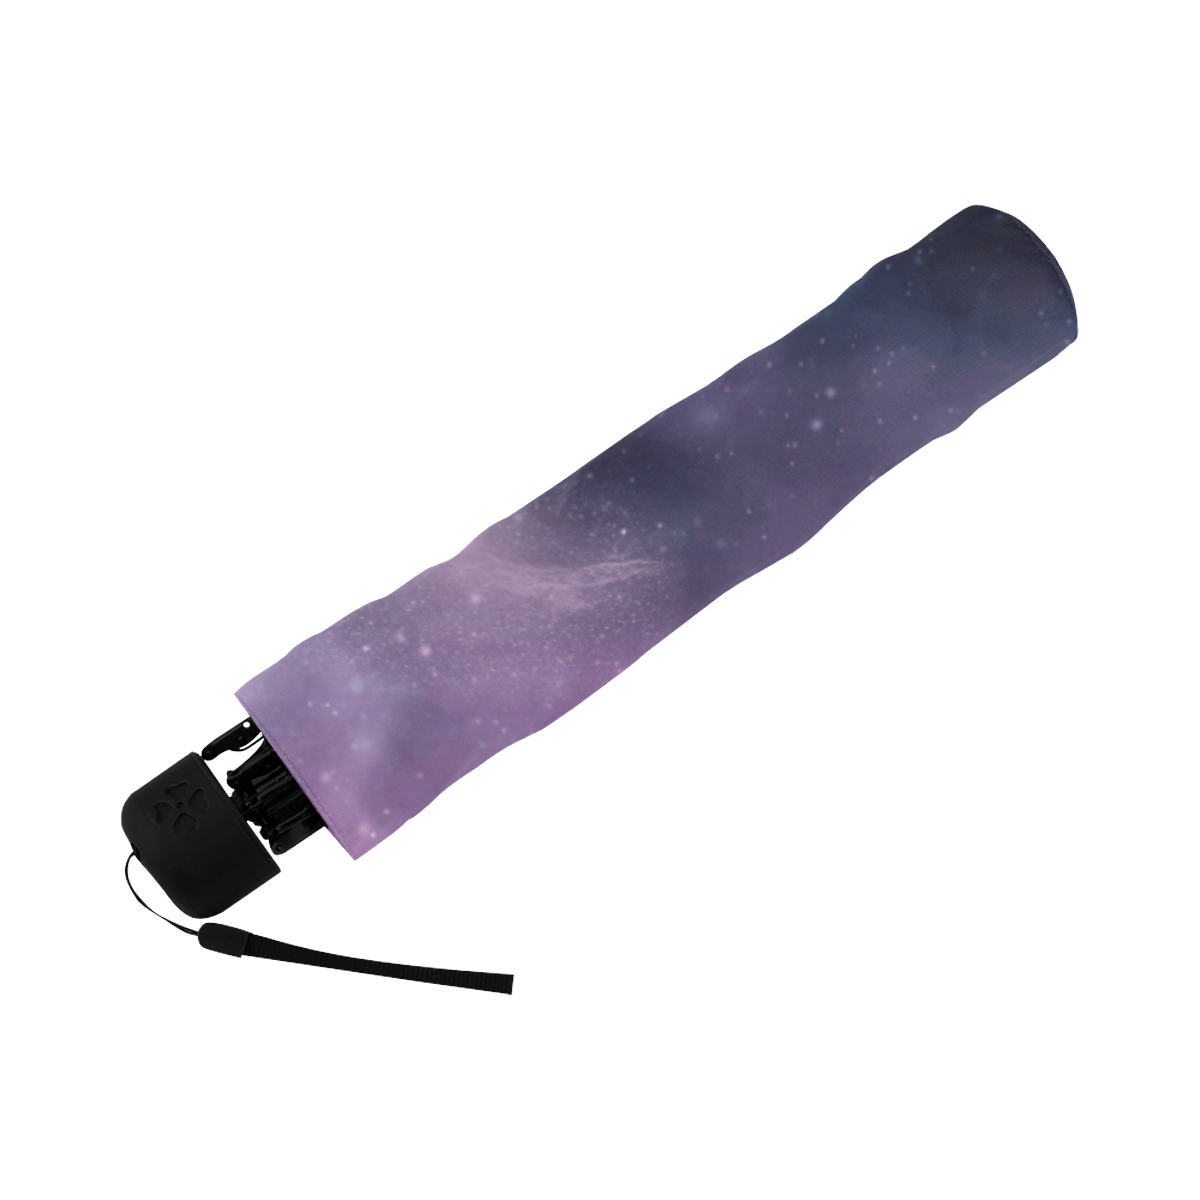 Wonderful violet dragon Anti-UV Foldable Umbrella (Underside Printing) (U07)